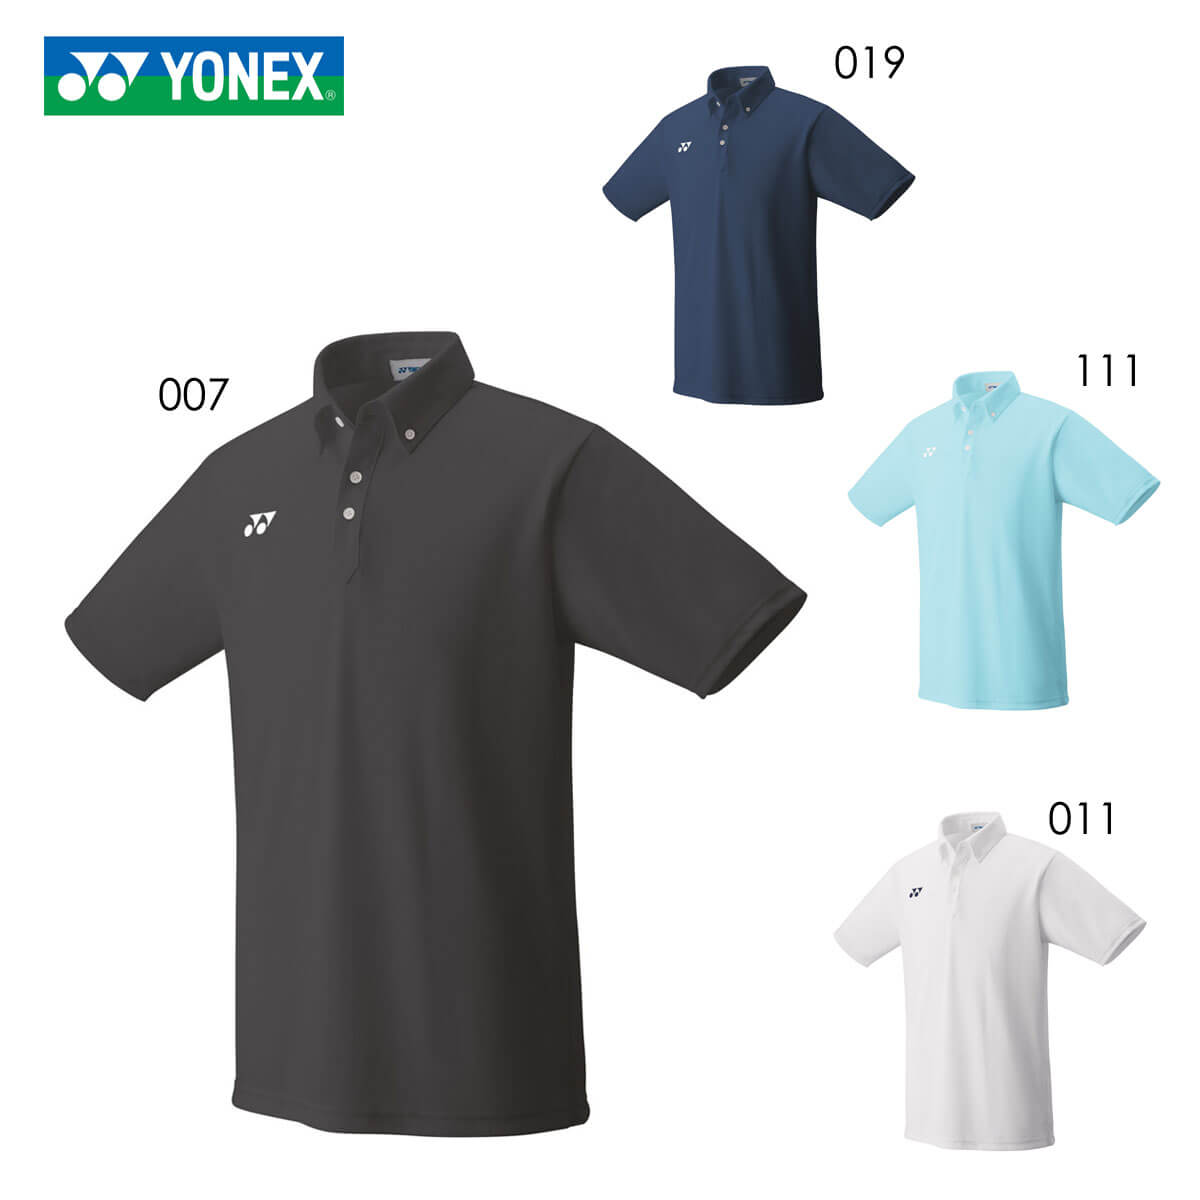 YONEX 10438 ユニゲームシャツ テニス バドミントンウェア 爆売りセール開催中 ユニ メンズ 2021SS 日本バドミントン協会審査合格品 メール便可 バドミントン ヨネックス ゲームシャツ 2021FW 取り寄せ ウェア 新色追加